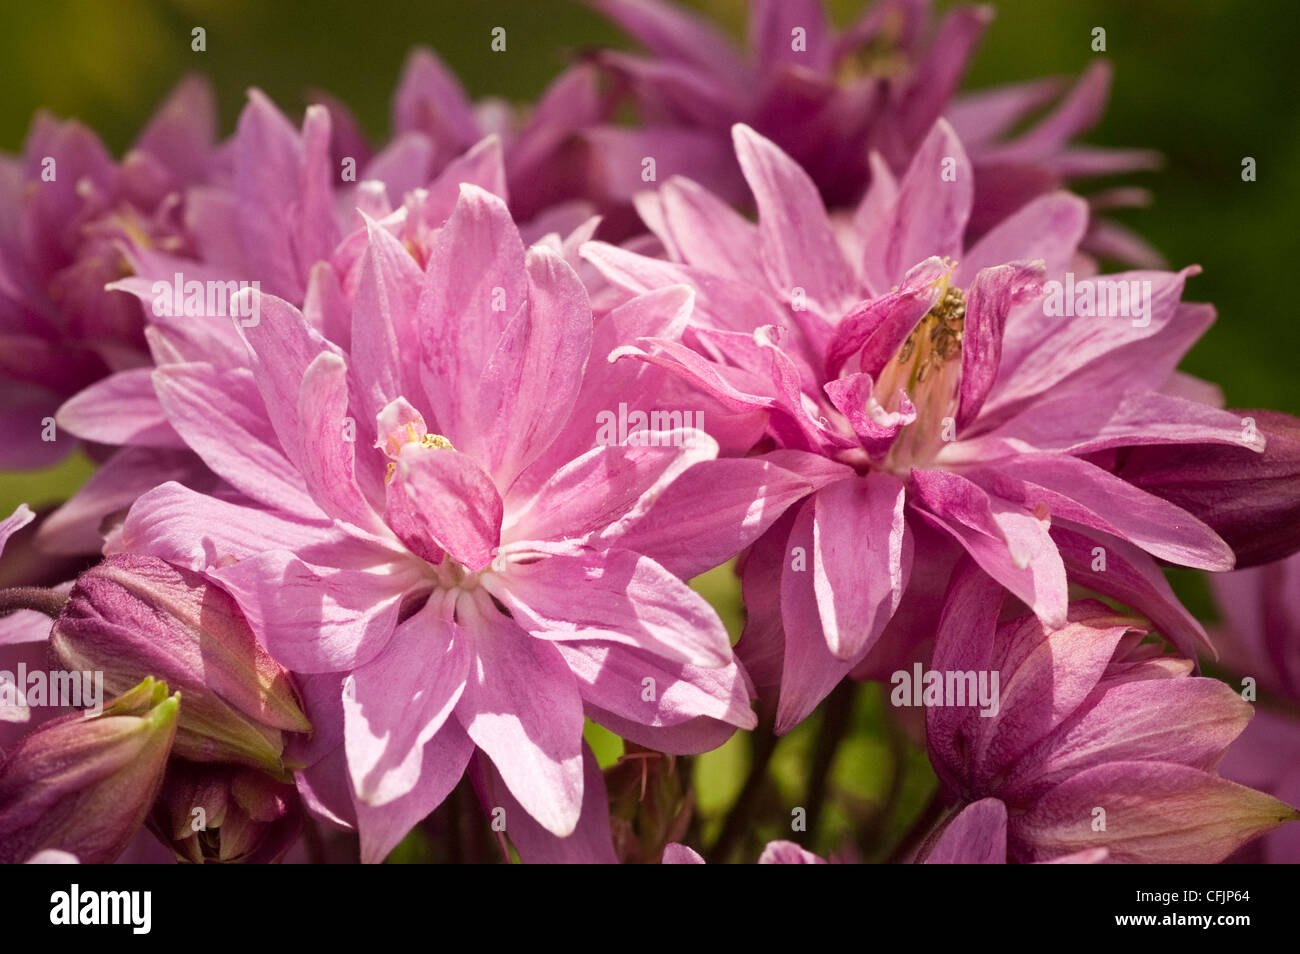 Pink flowers of Columbine var Clementine rose, Aquilegia vulgaris, Stock Photo